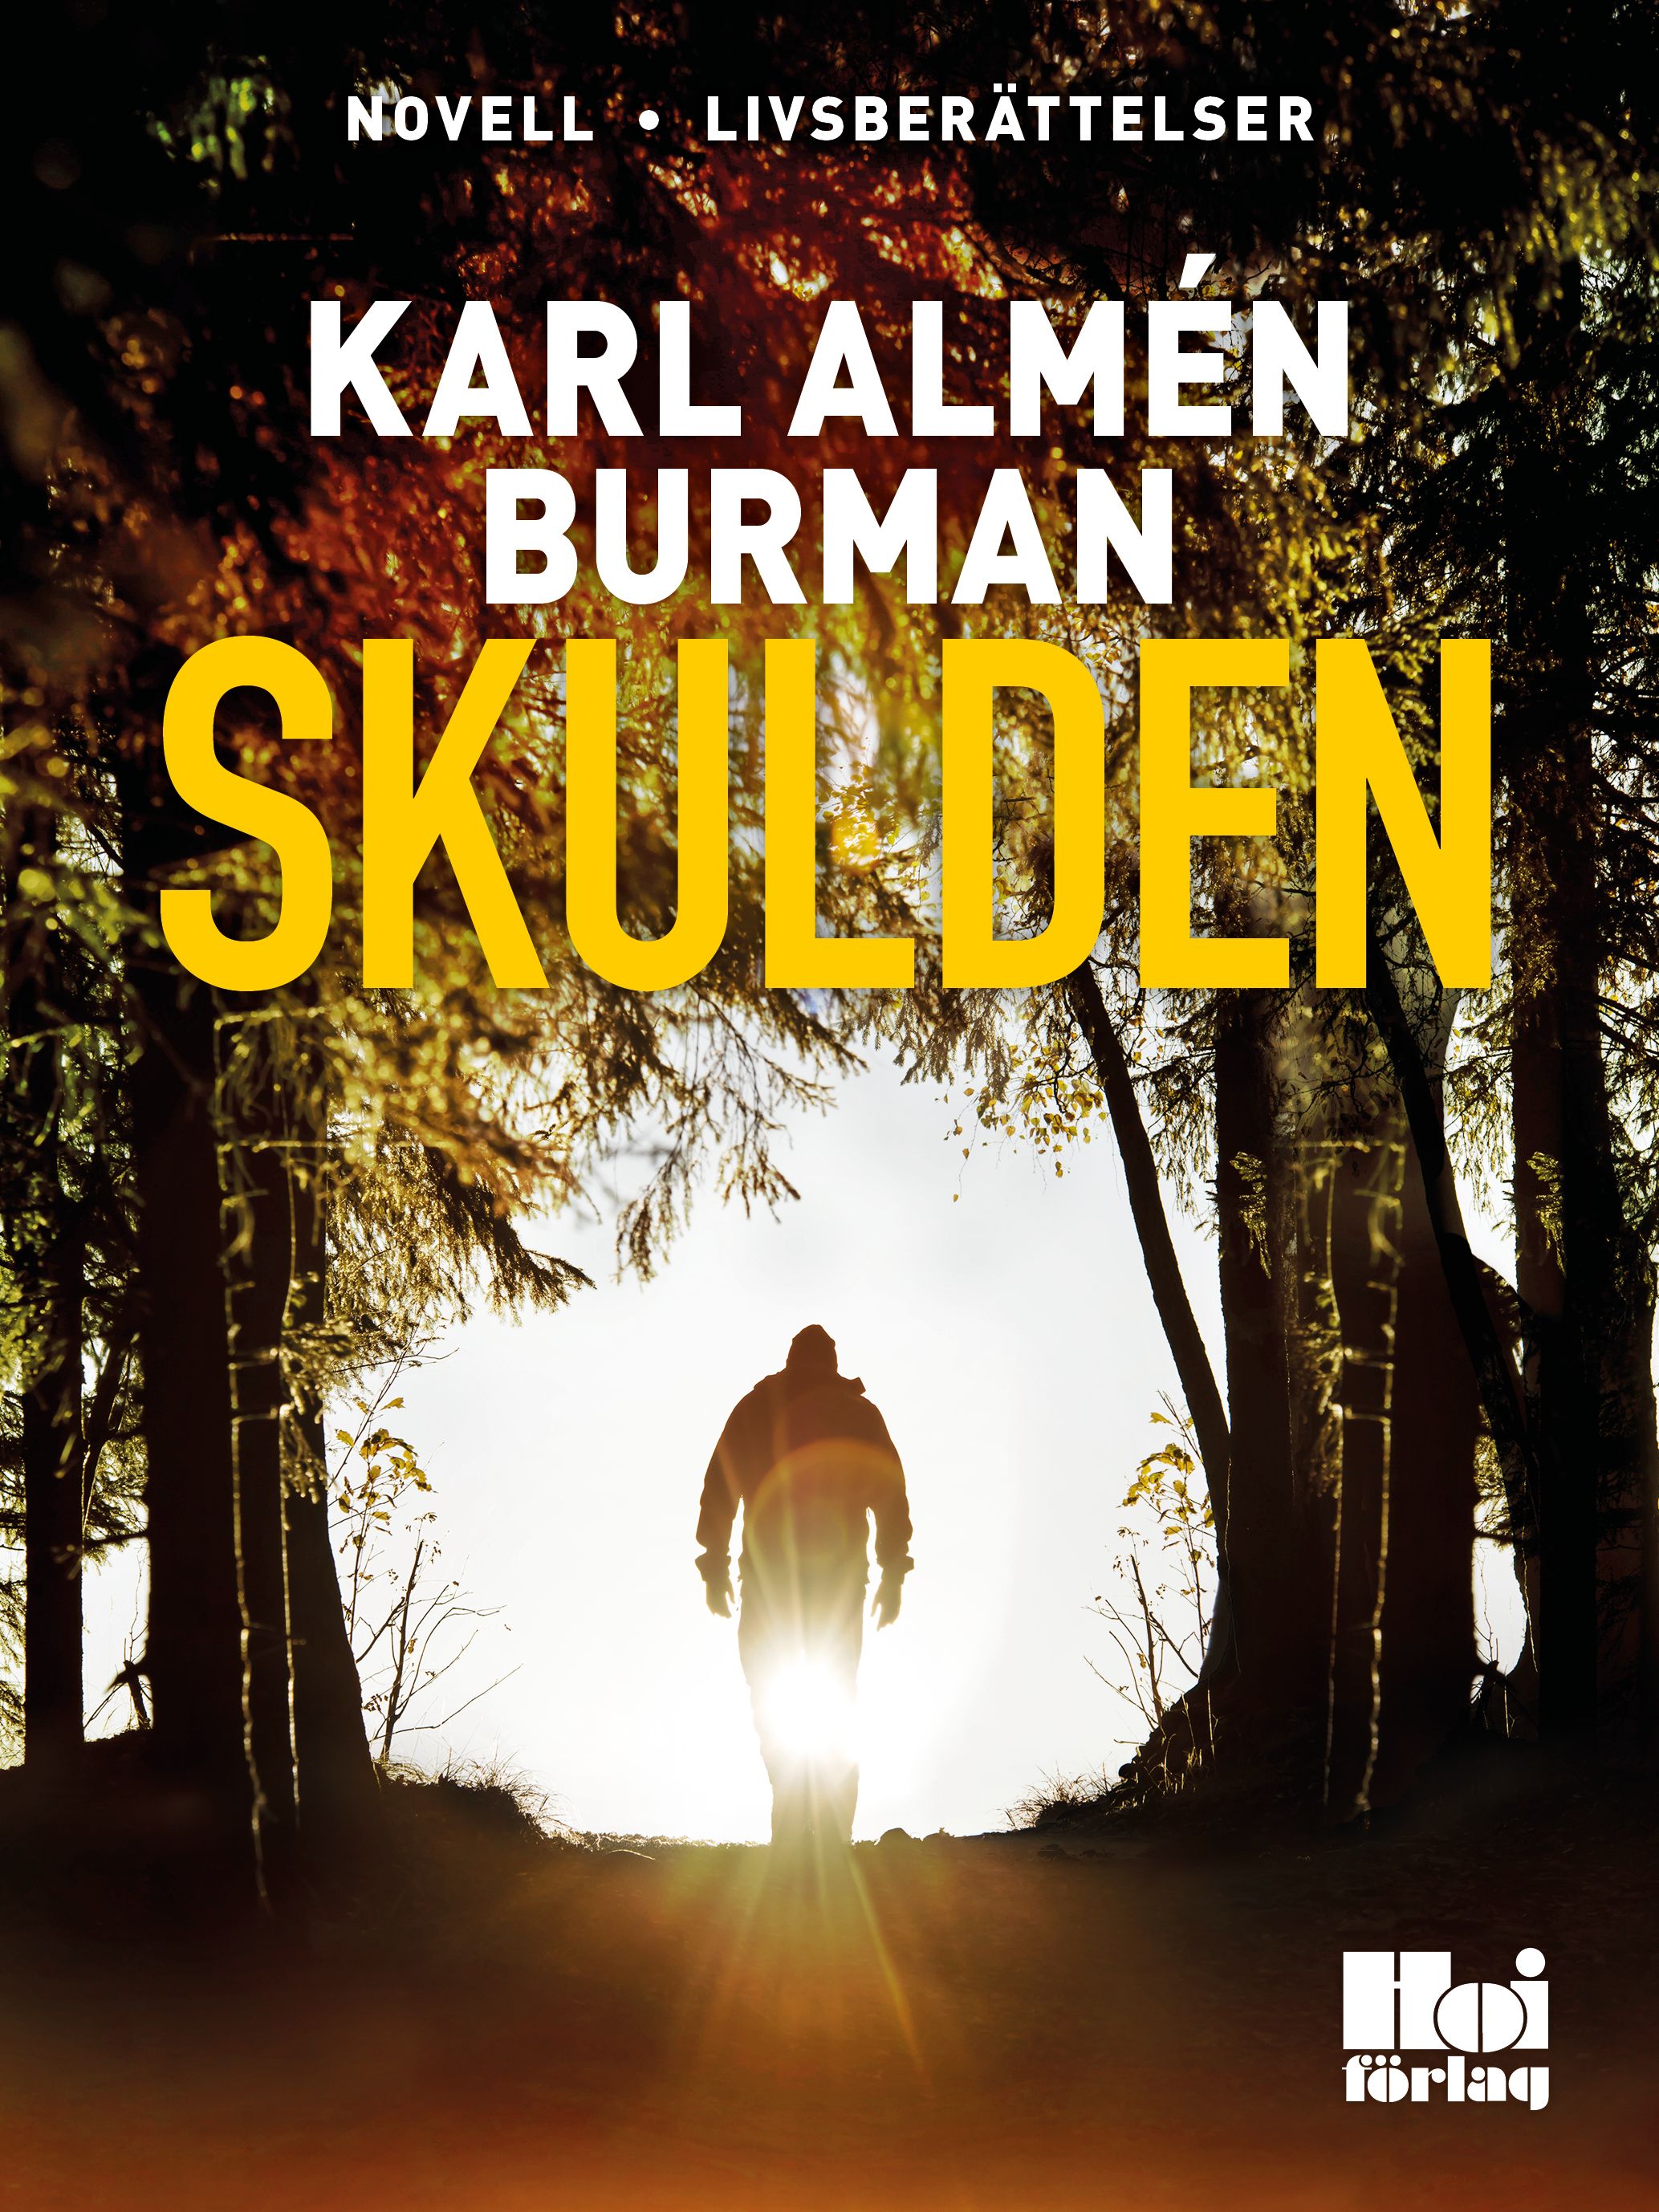 Skulden, eBook by Karl Almén Burman